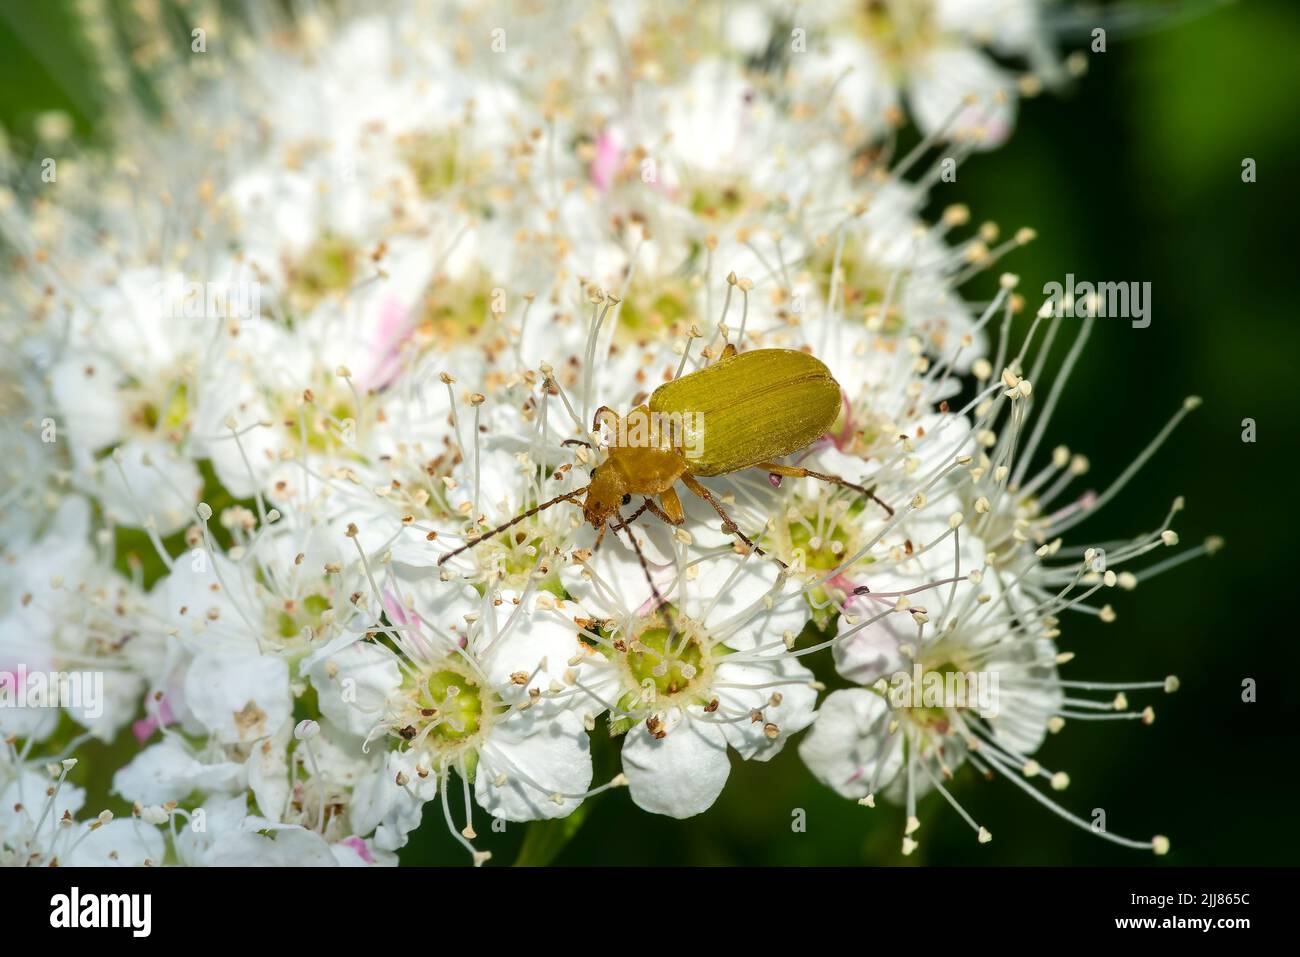 Sulphur Beetle (Cteniopus sulphureus) feeding on a spirea shrub flower which is a yellow flying insect, stock photo image Stock Photo